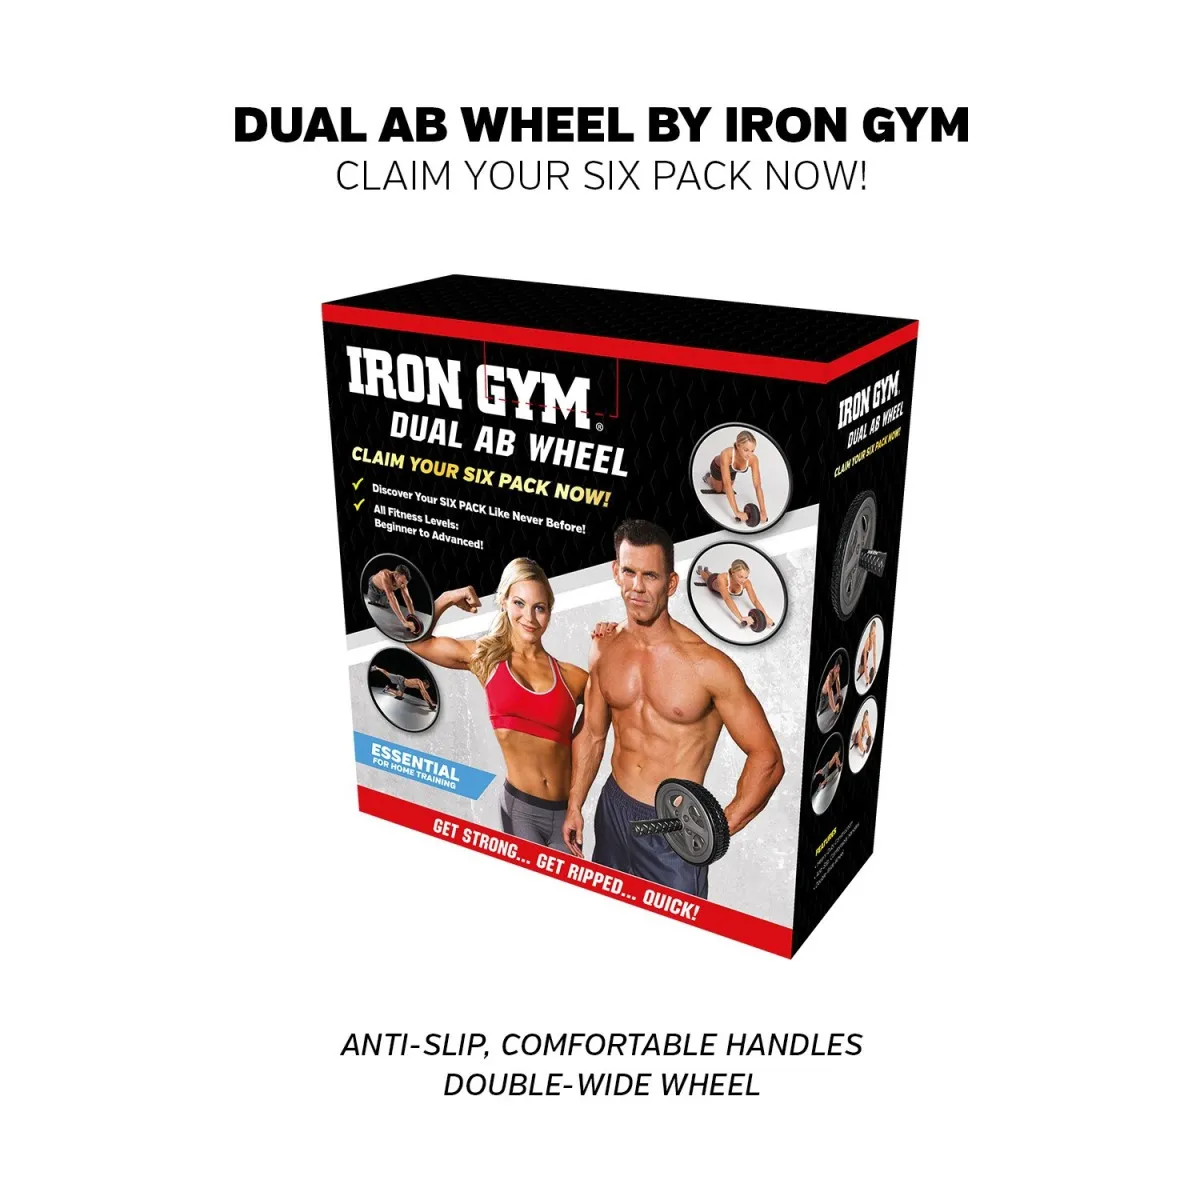 Iron Gym - Dual Ab Wheel Verpackung